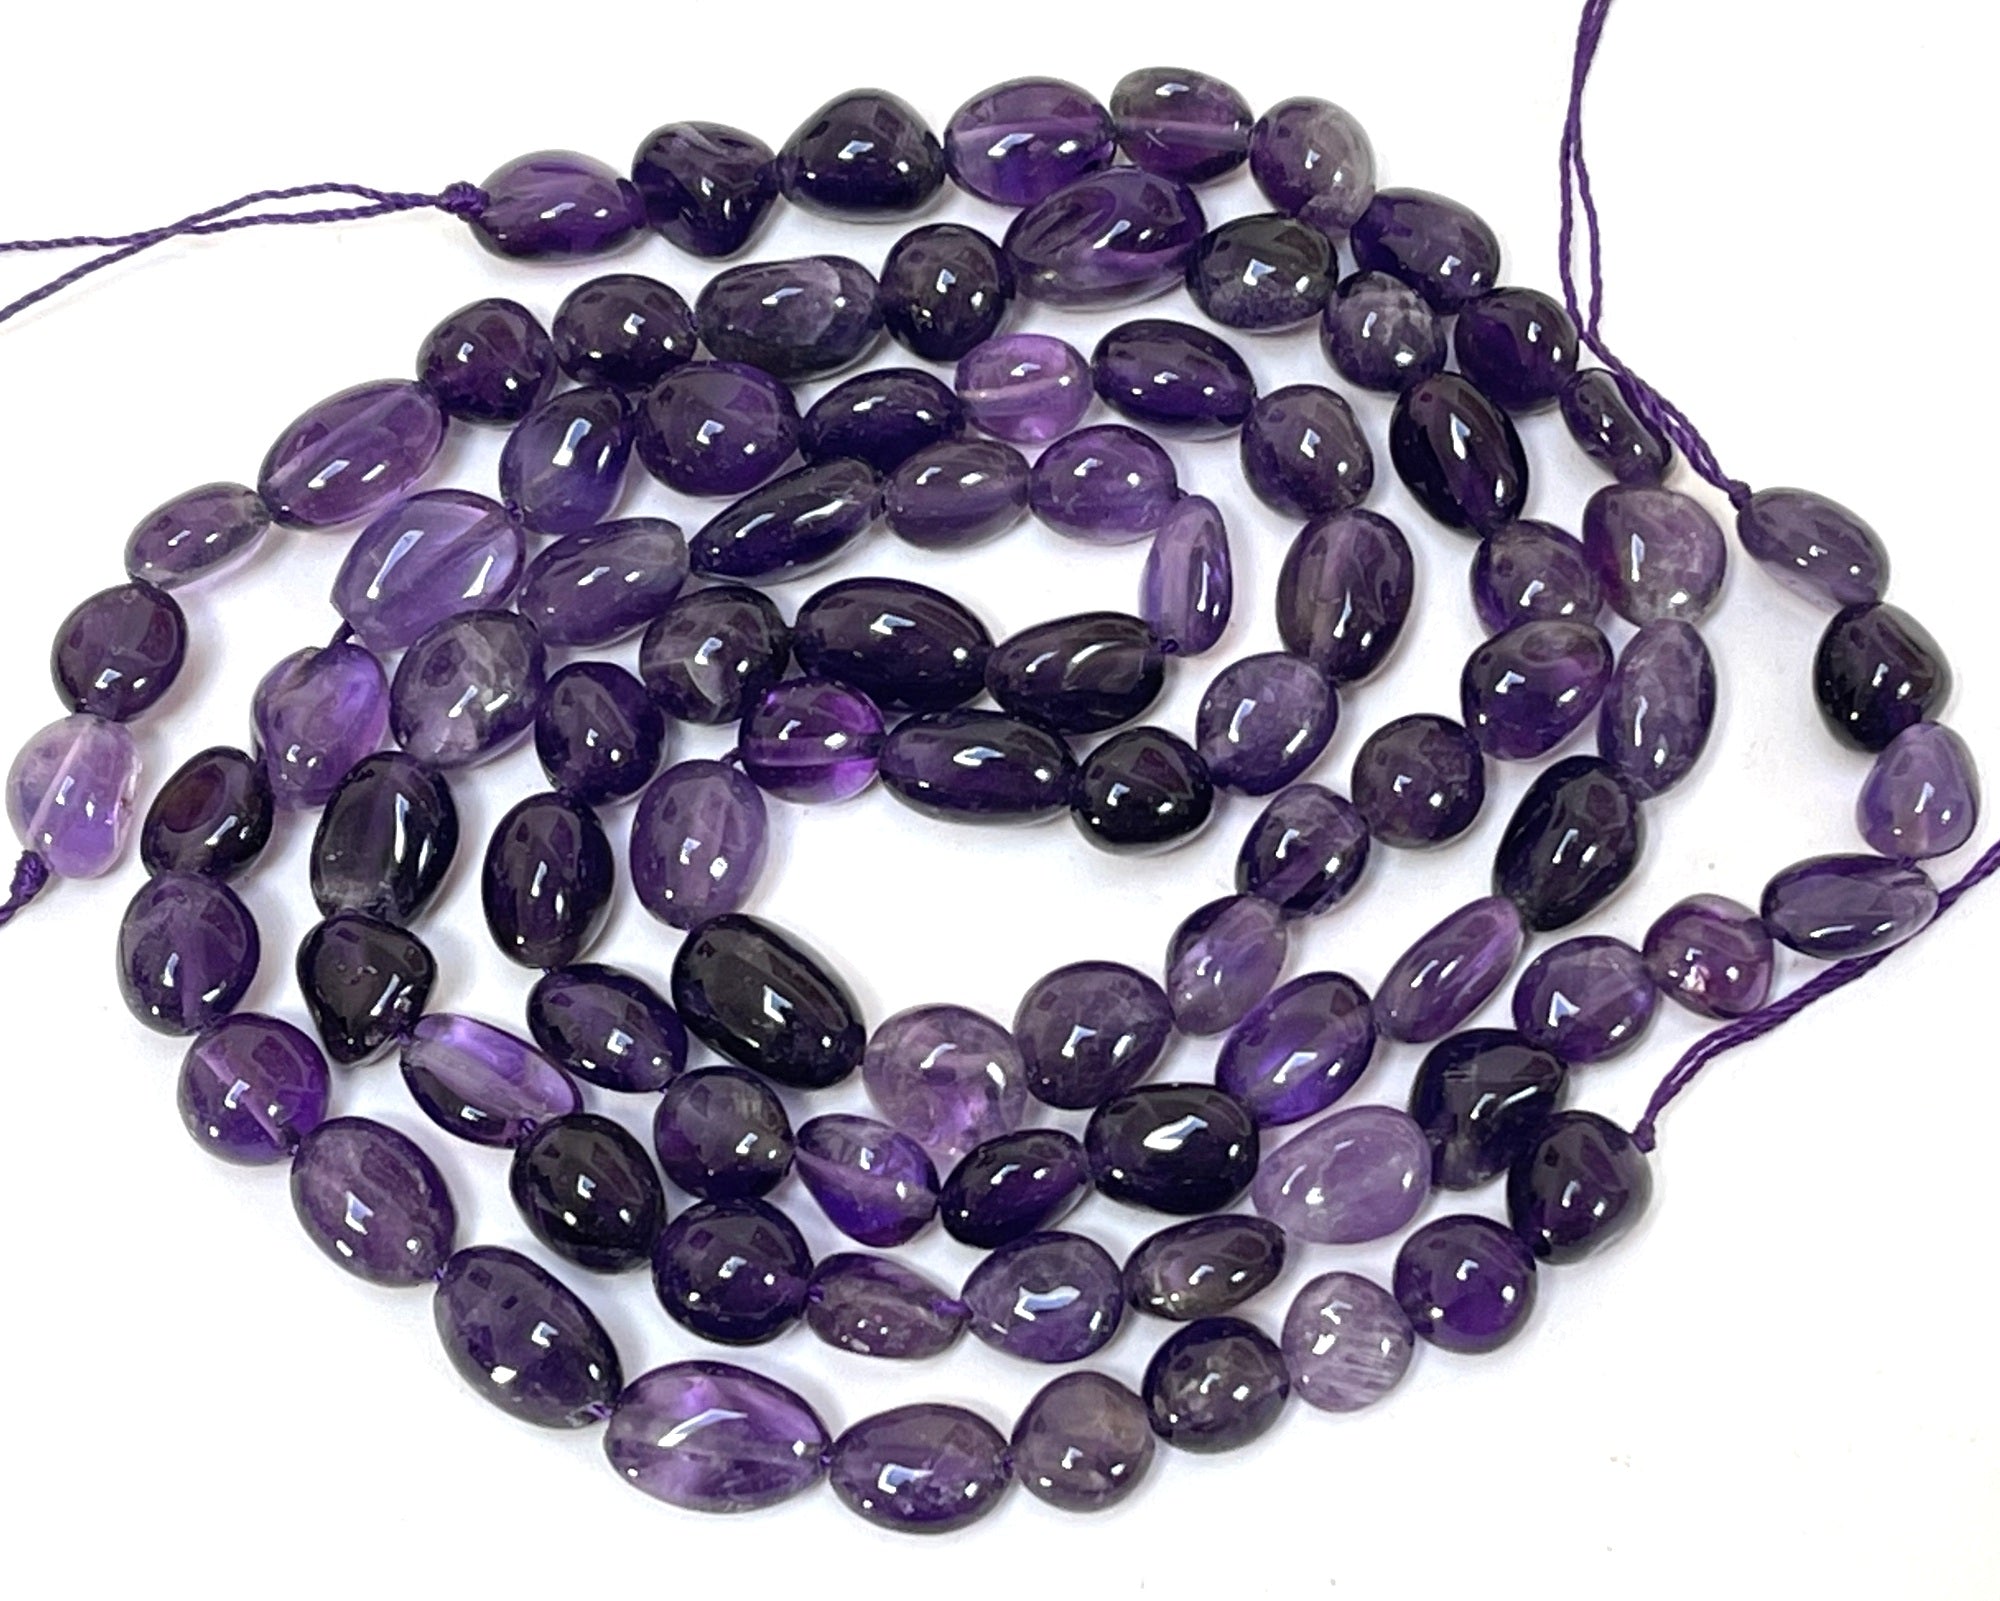 Amethyst 8-11mm nuggets natural gemstone pebble beads 16" strand